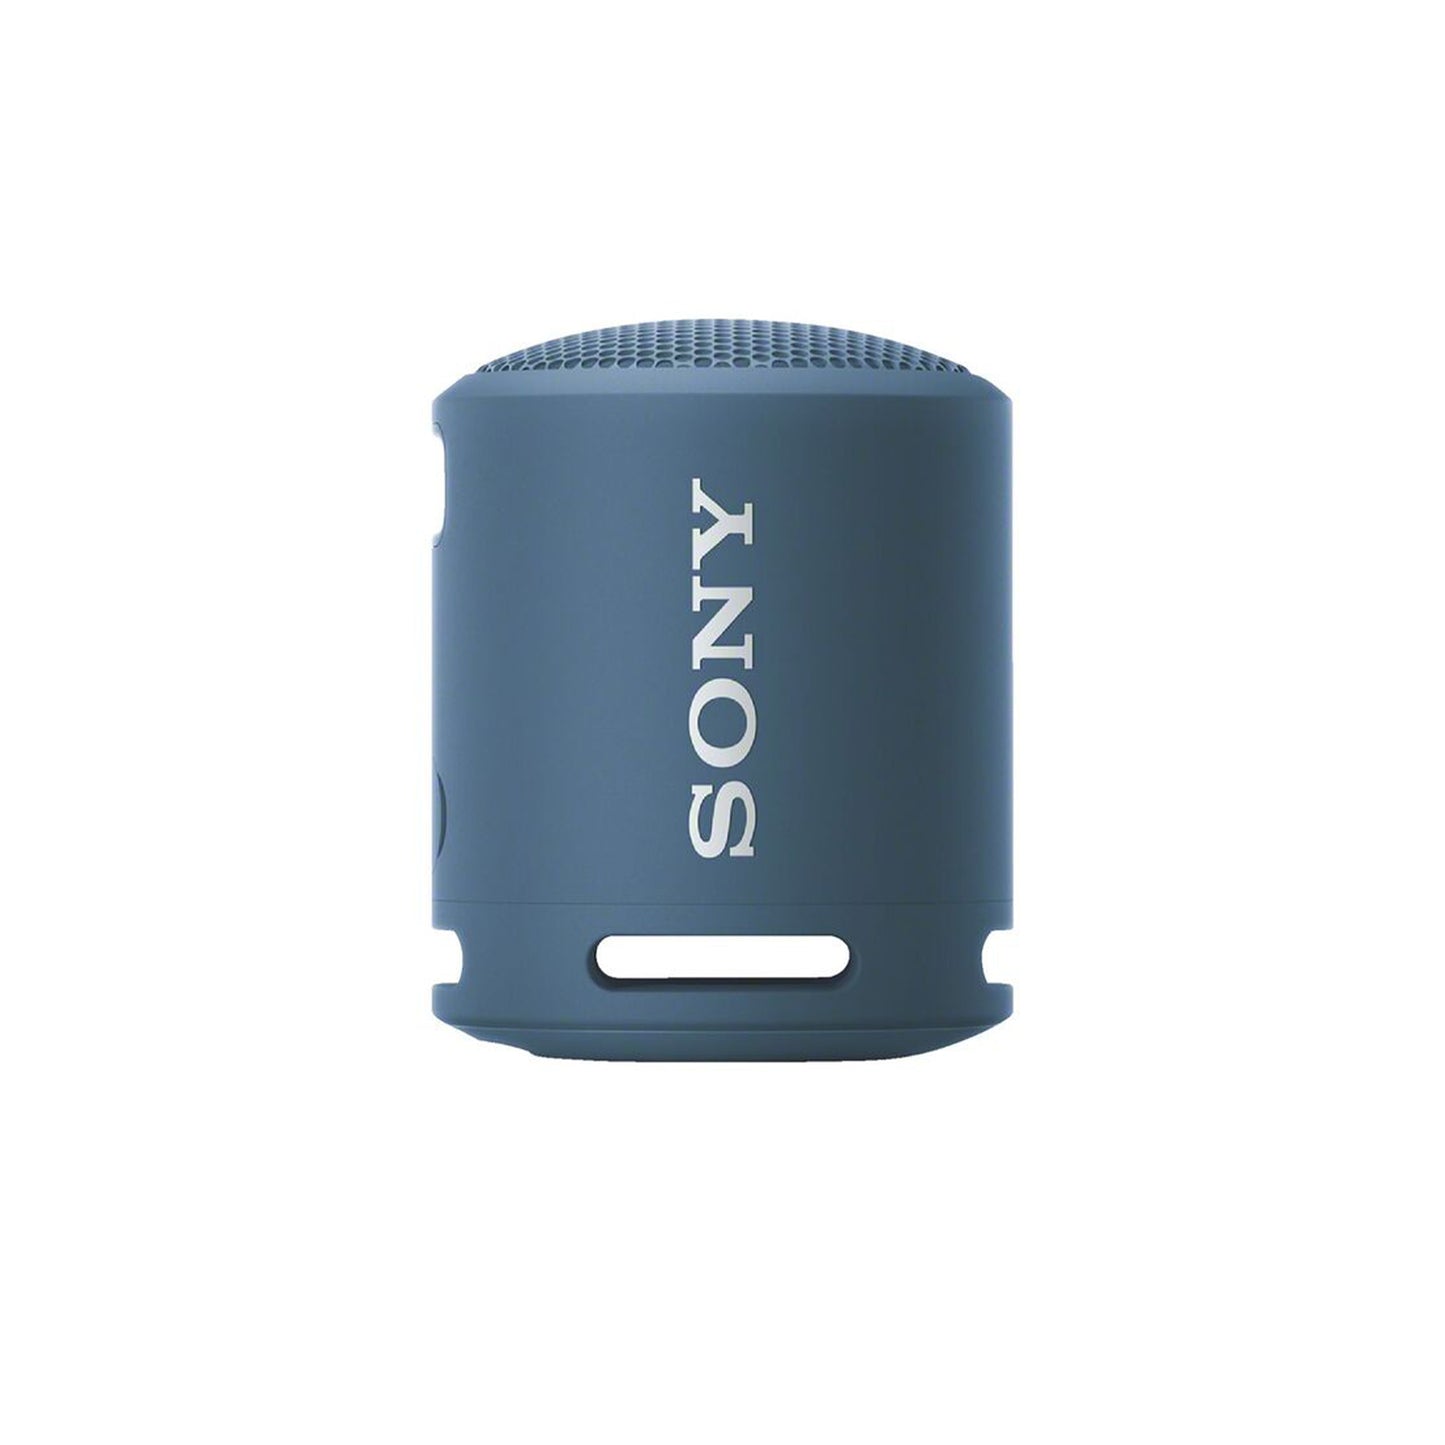 SONY XB13 Extra Bass Portable Bluetooth Speaker - Blue